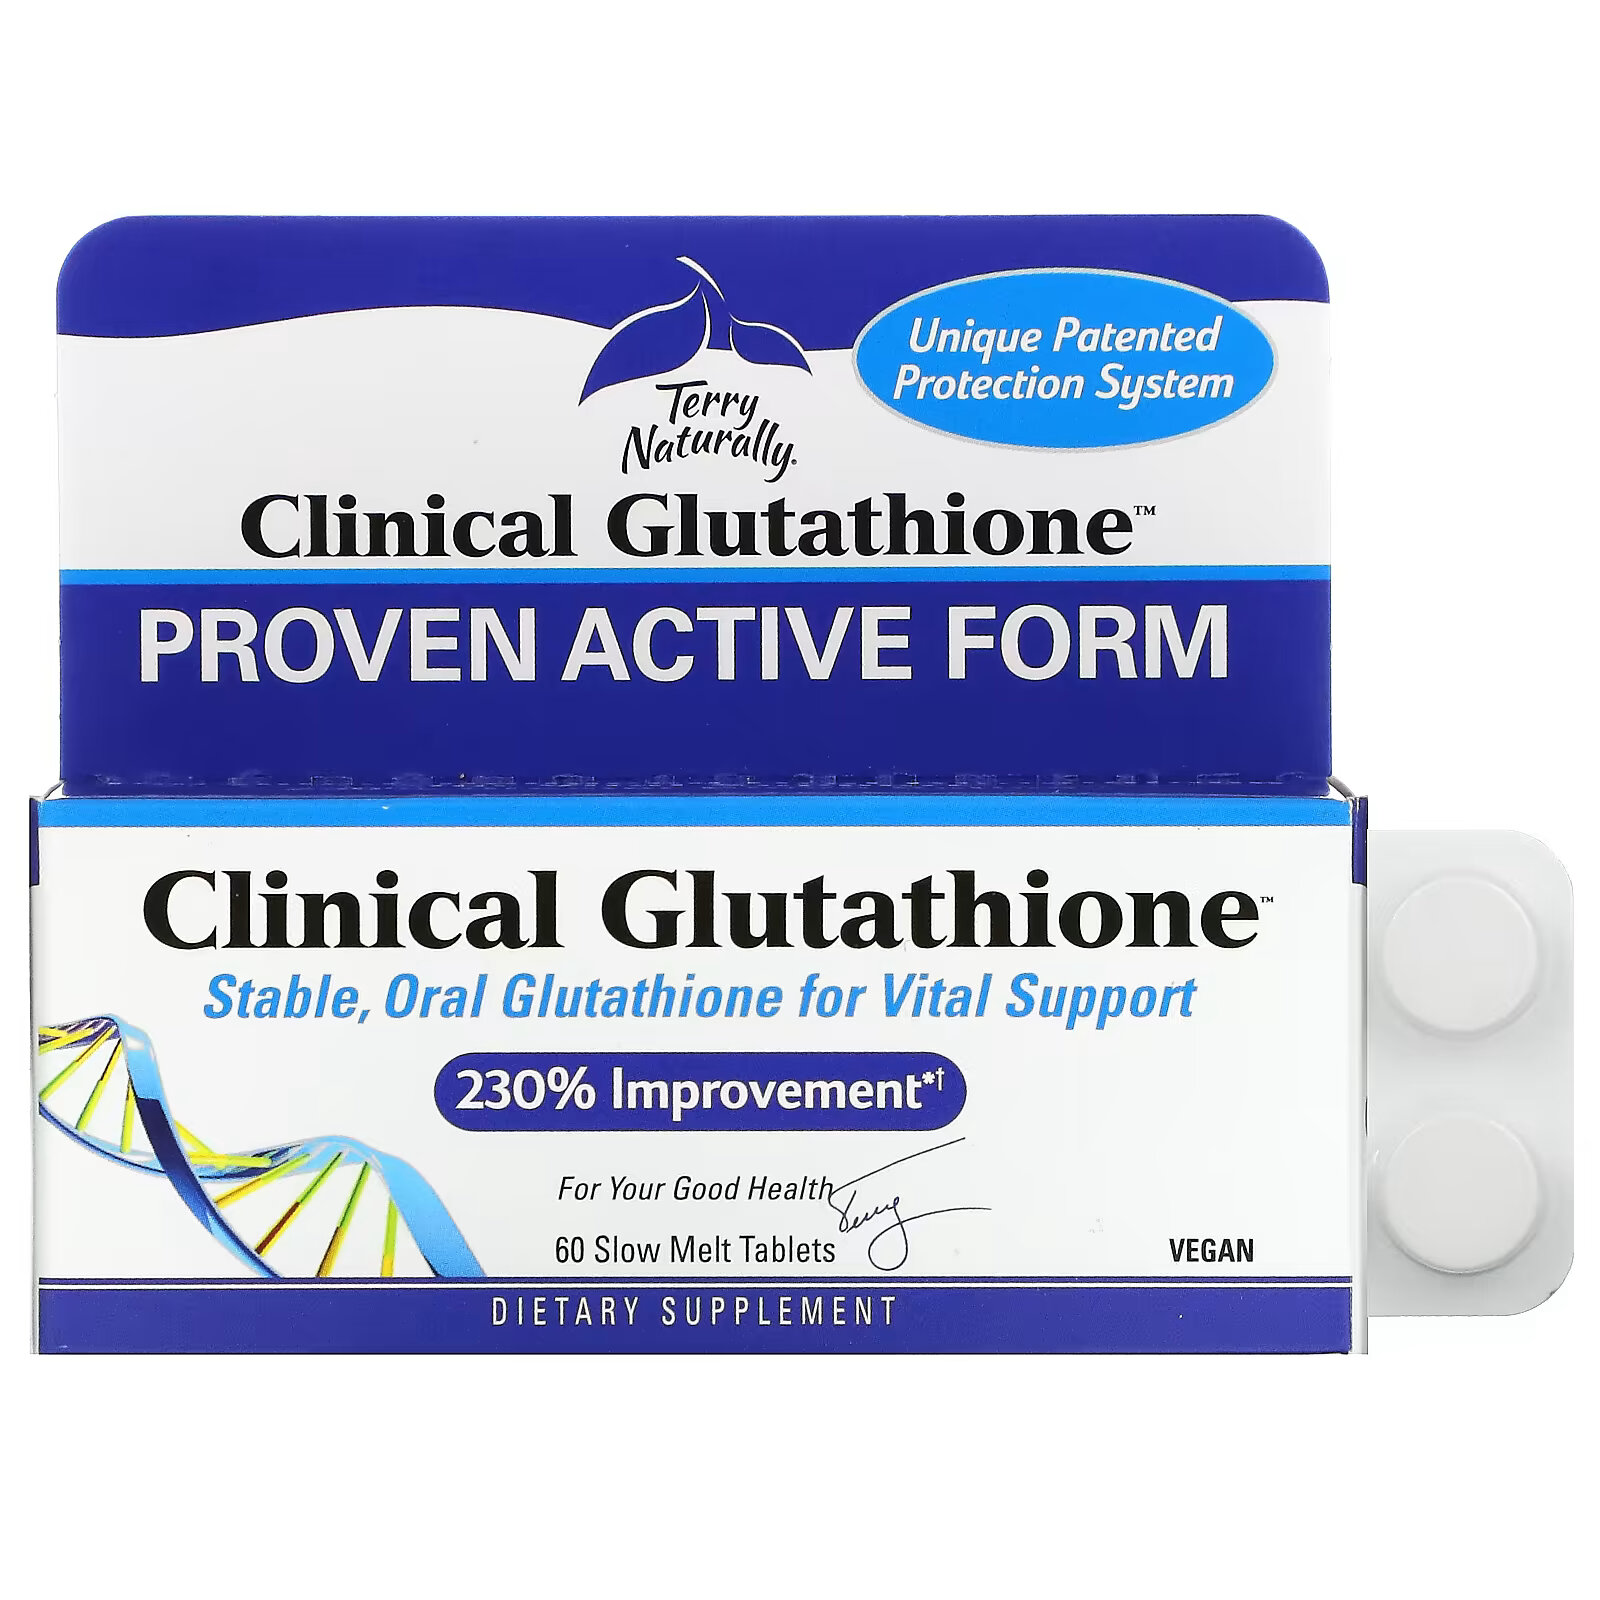 Terry Naturally, Clinical Glutathione, 60 медленно растворяемых таблеток europharma terry naturally клинический глутатион 60 медленно растворяемых таблеток